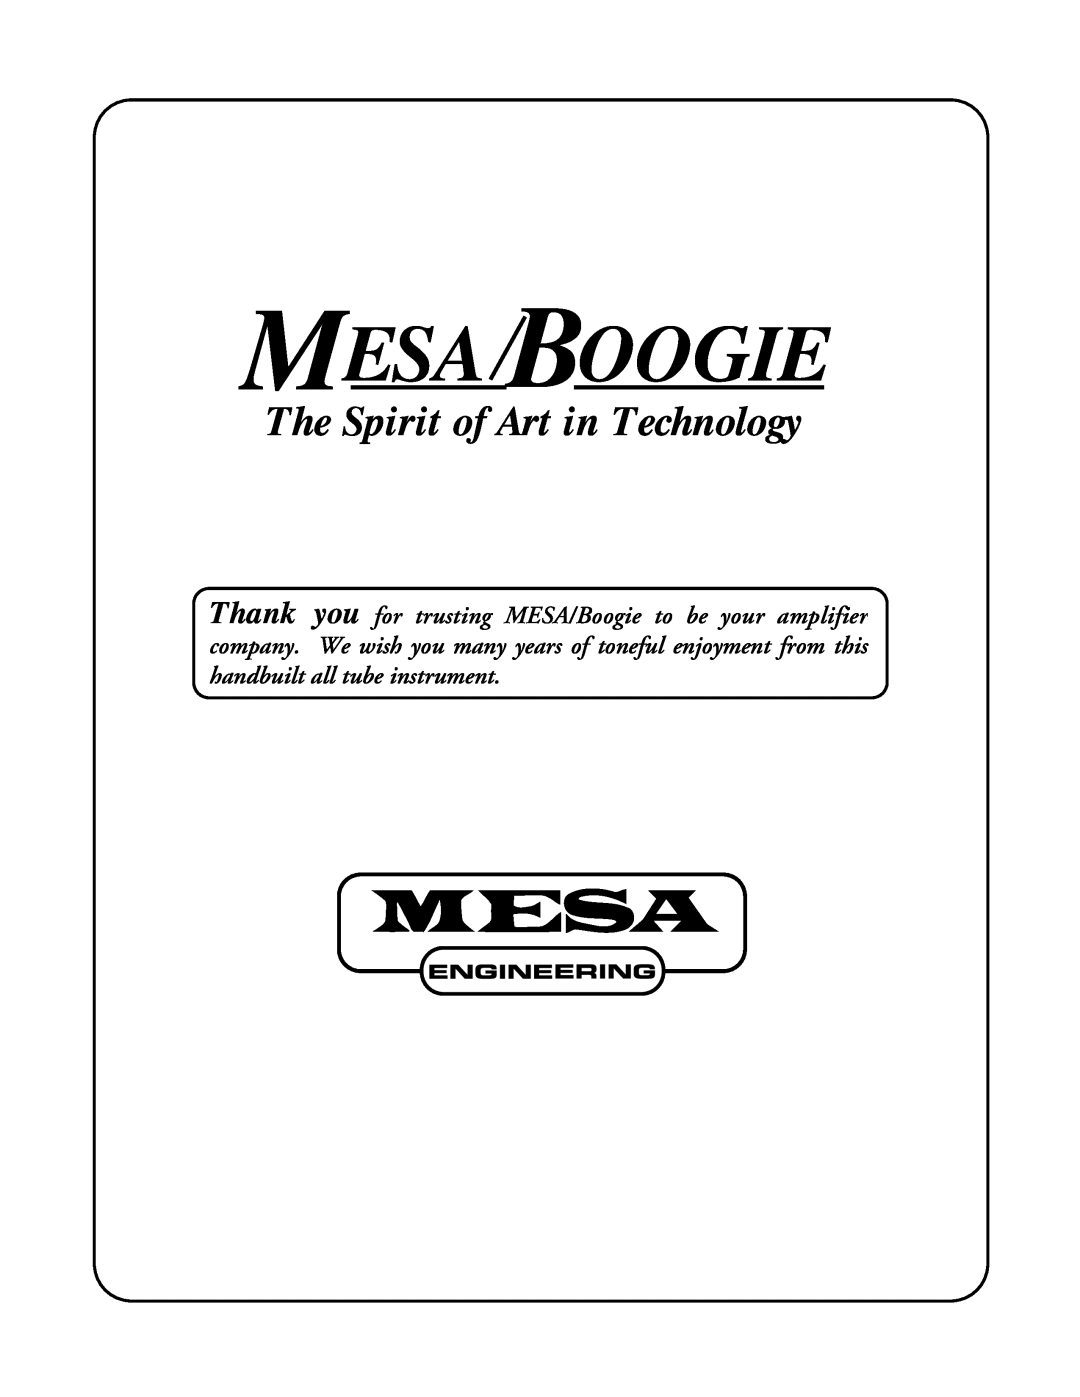 Mesa/Boogie Vacuum Tube Audio owner manual The Spirit of Art in Technology, Mesa Boogie 